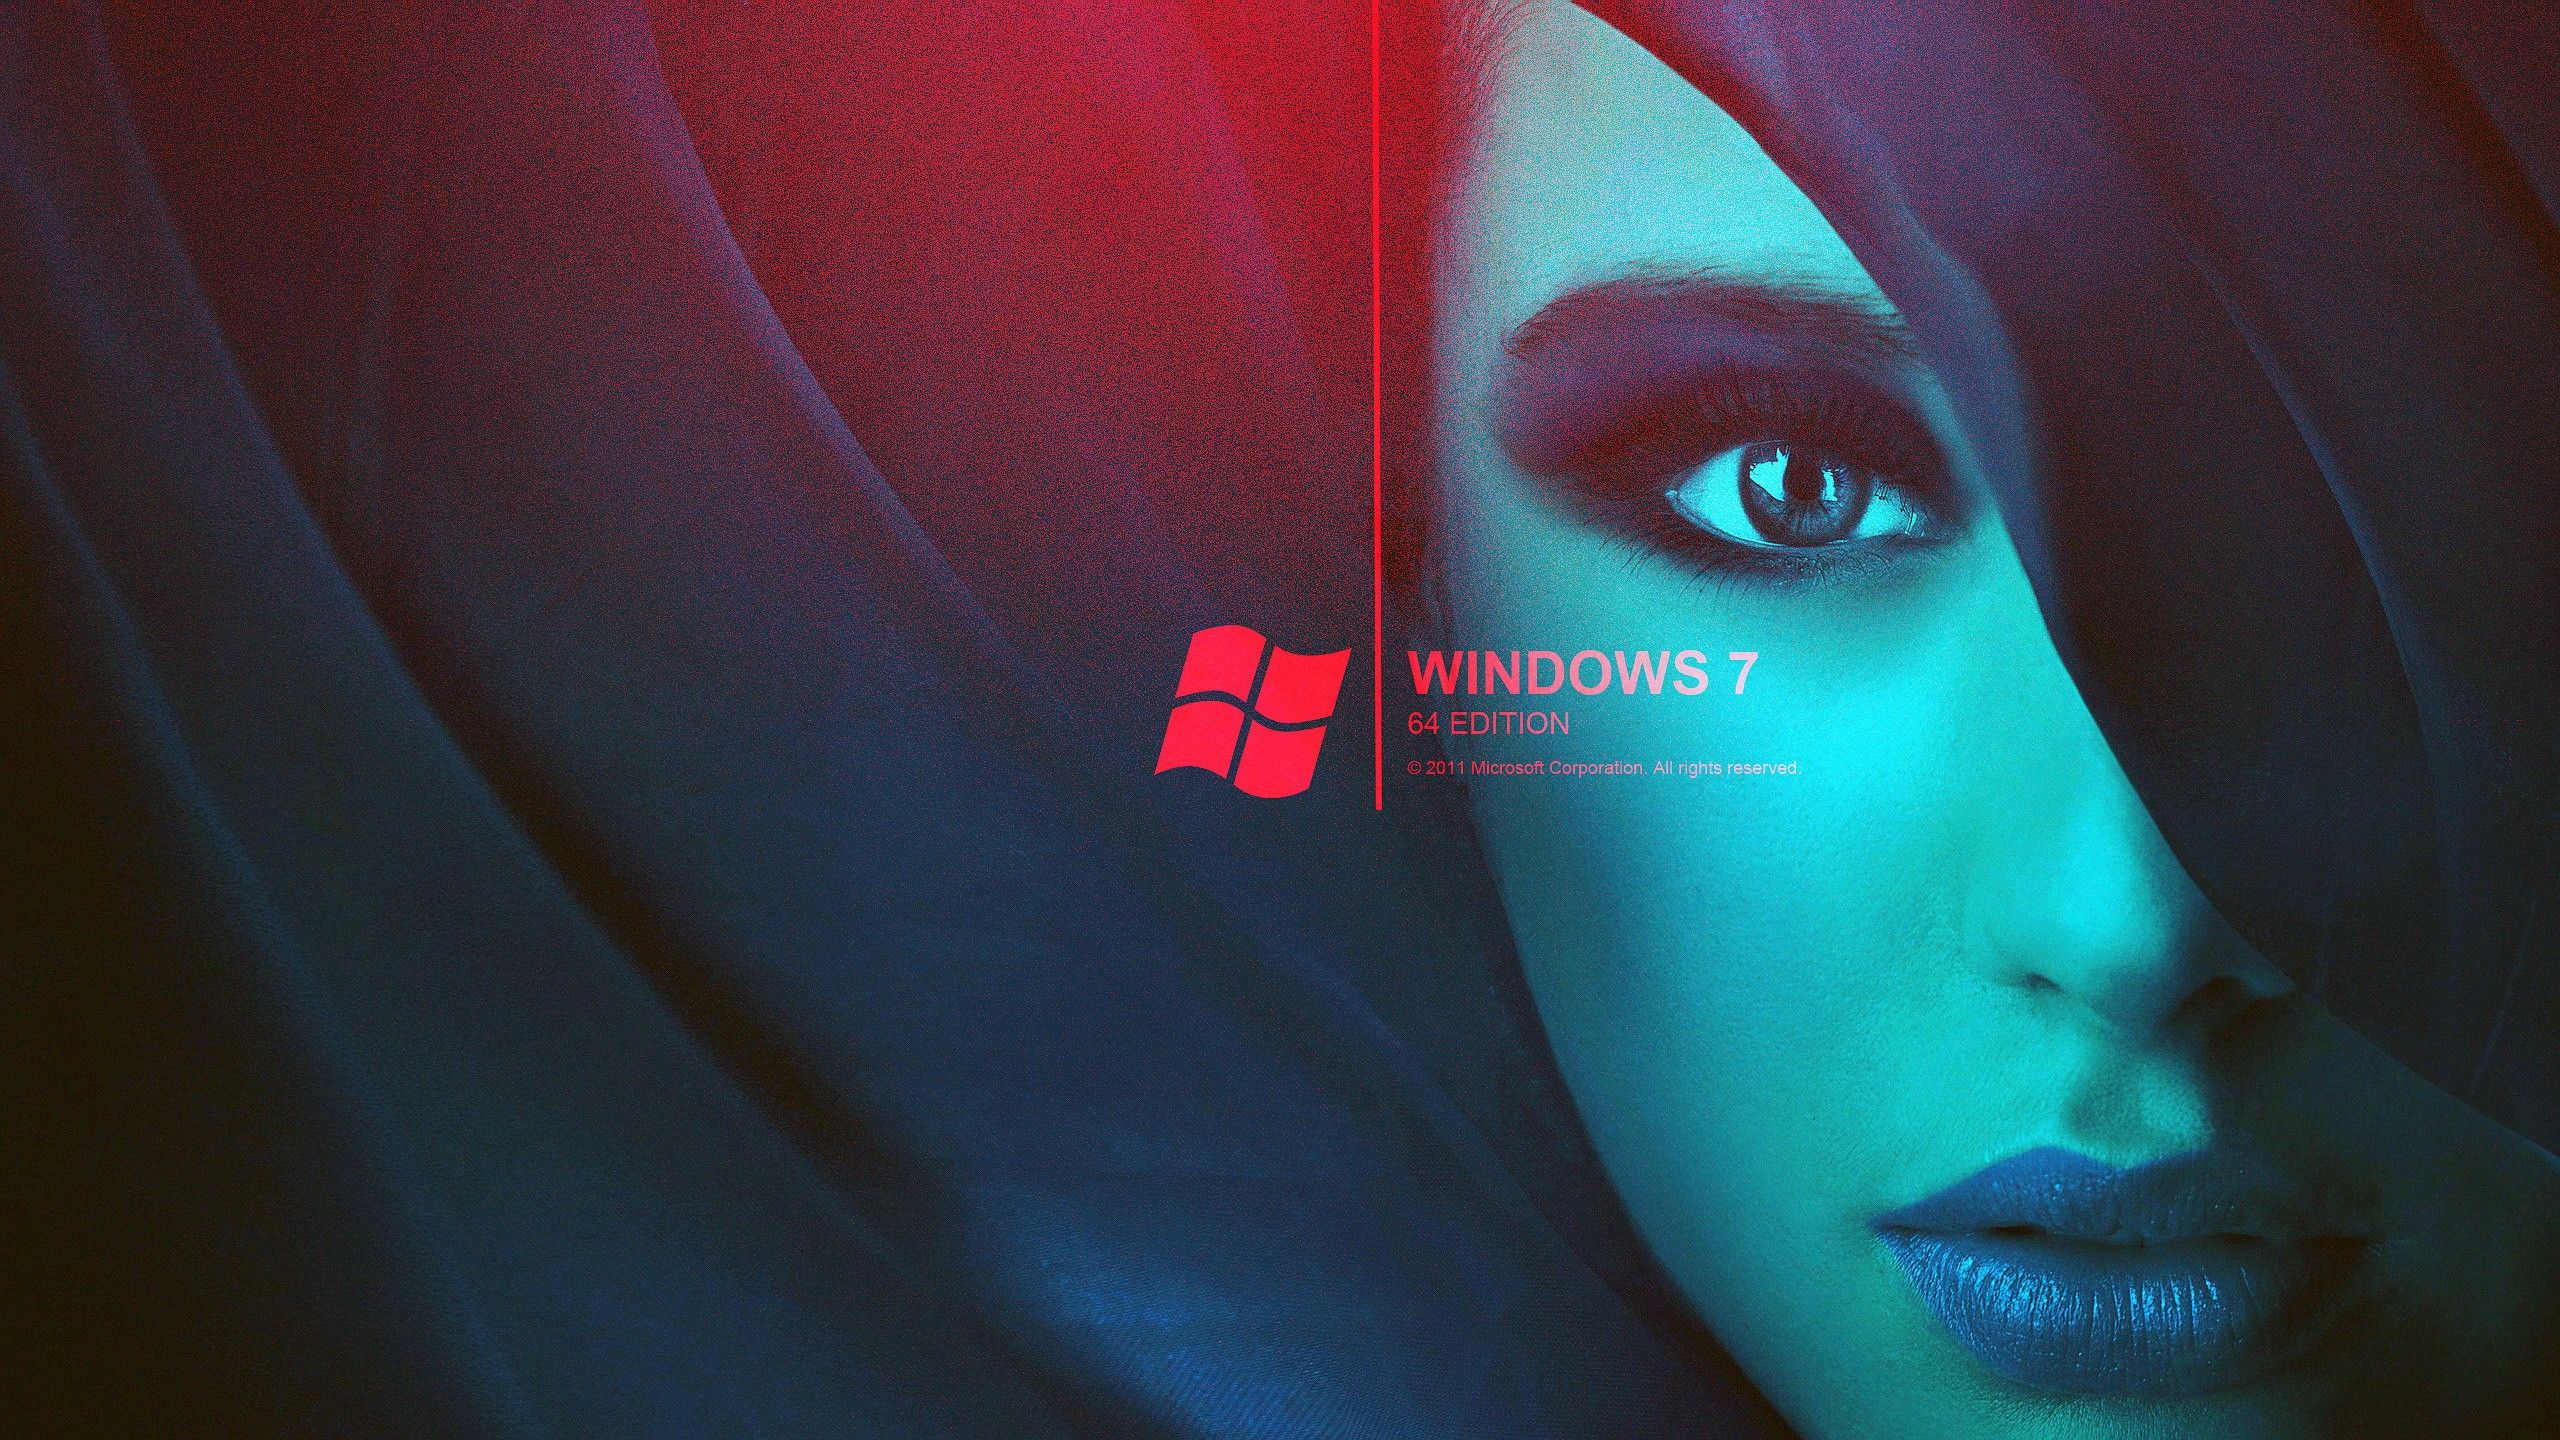 Wallpaper, 2560x1440 px, simple background, window, Windows women 2560x1440